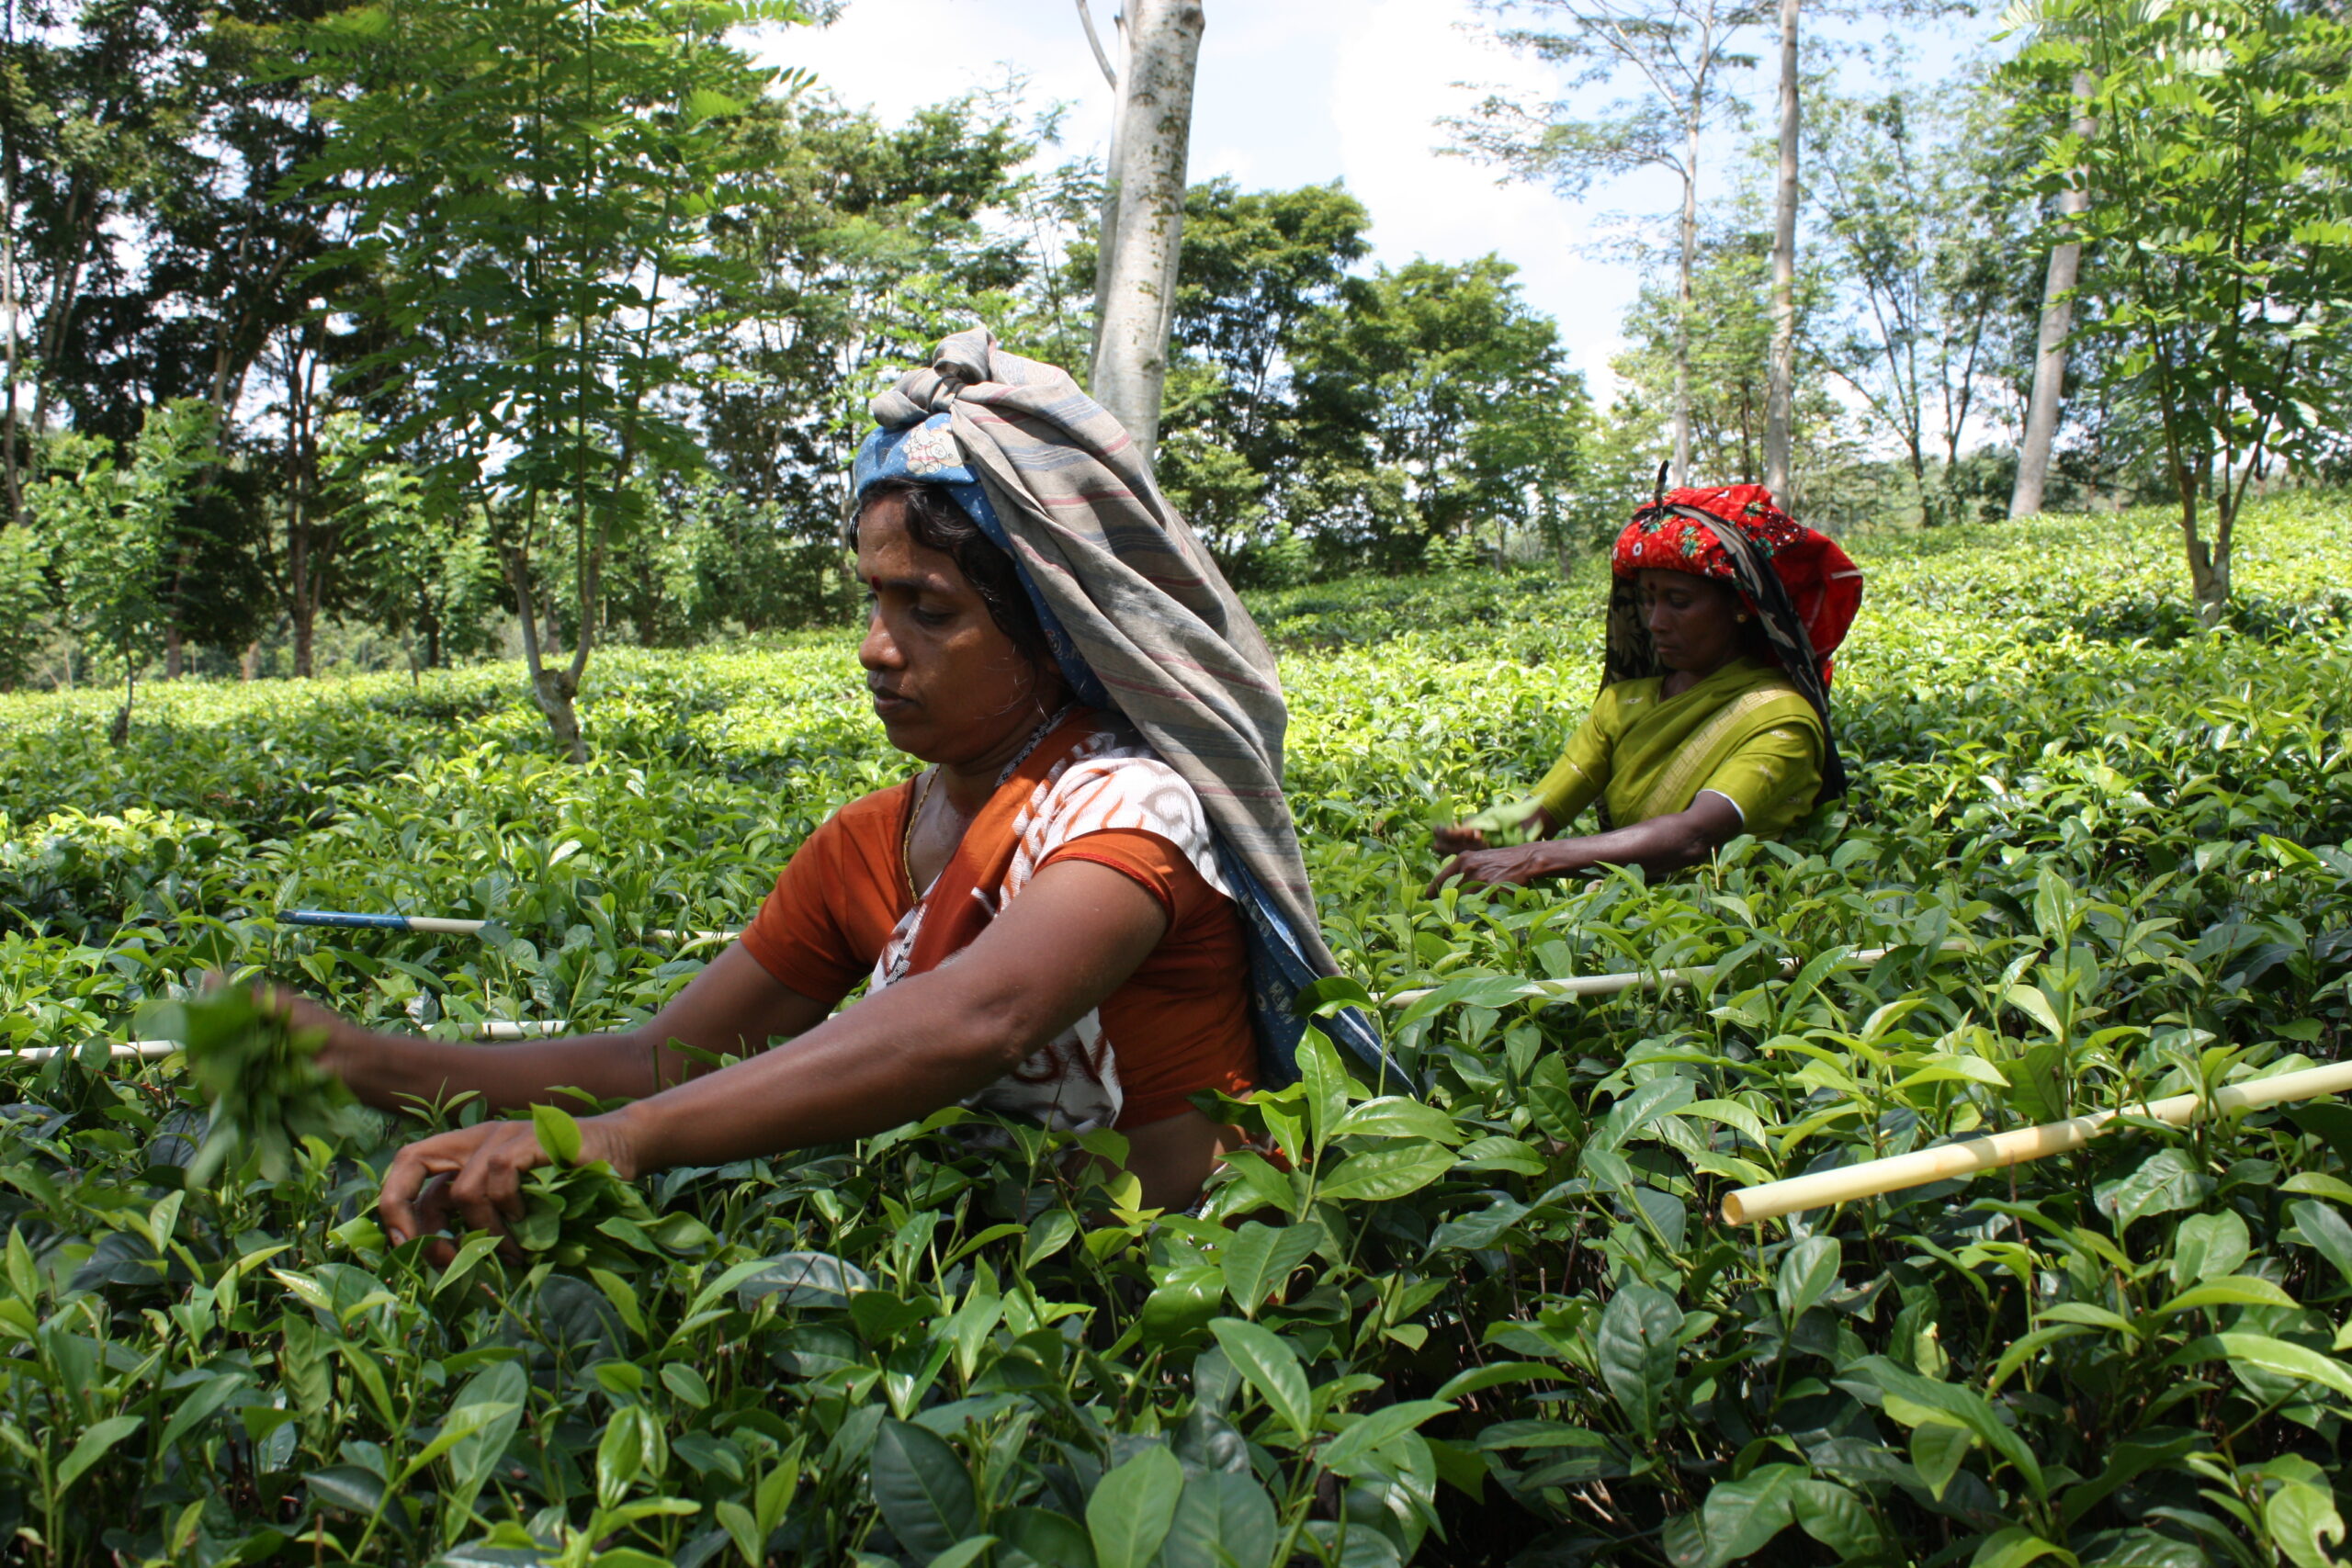 Шри ланка производство. Шри Ланка сельское хозяйство. Сельское хозяйство Шри Ланки. Шри Ланка сбор чая. Экономика Шри Ланки.